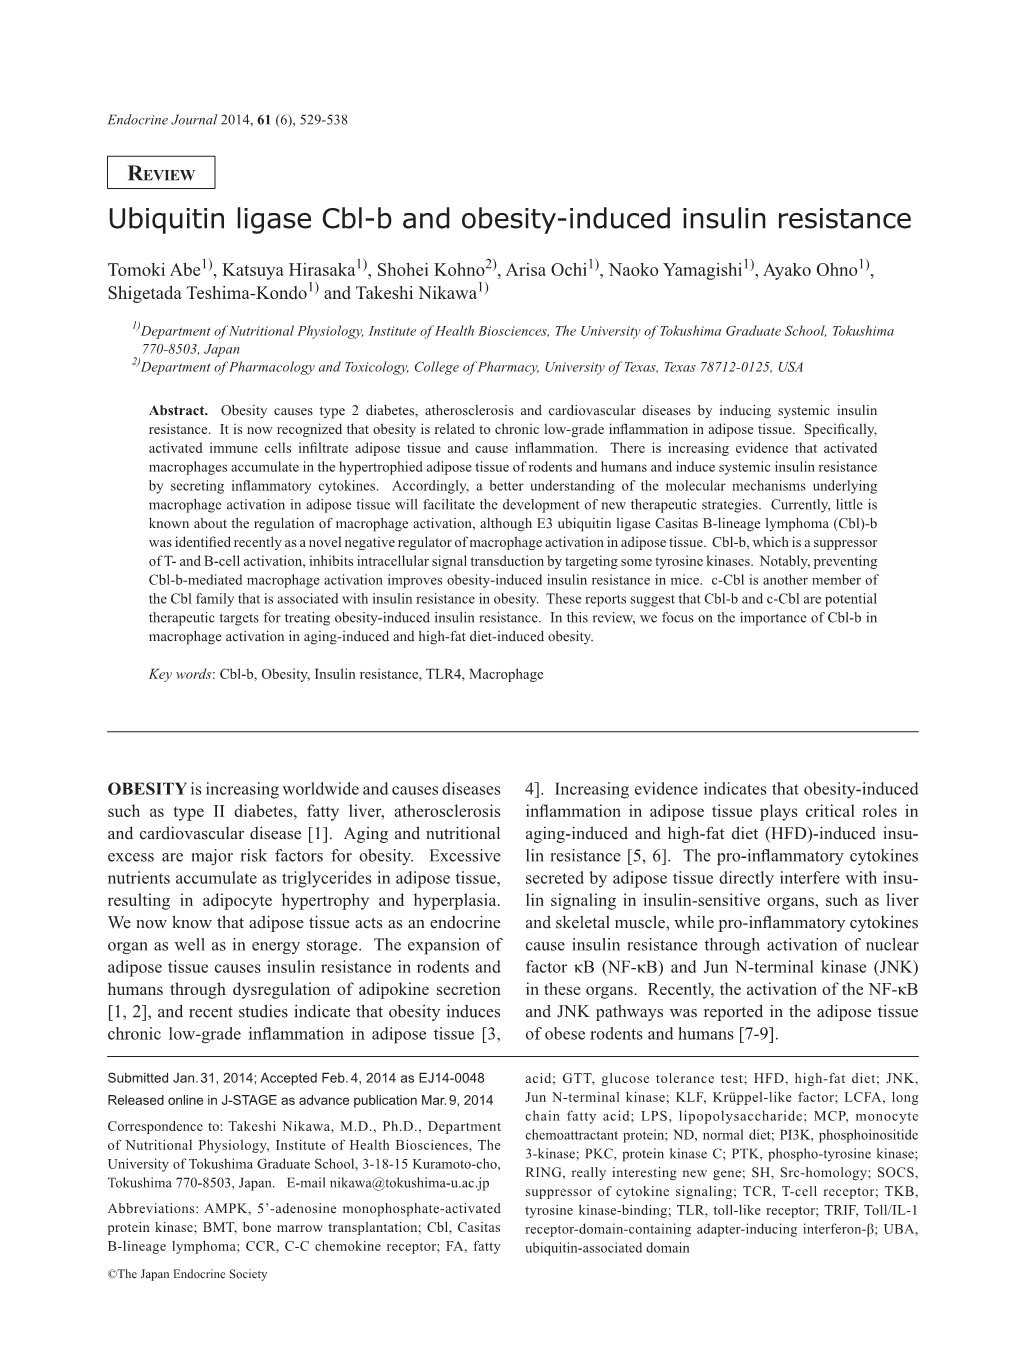 Ubiquitin Ligase Cbl-B and Obesity-Induced Insulin Resistance